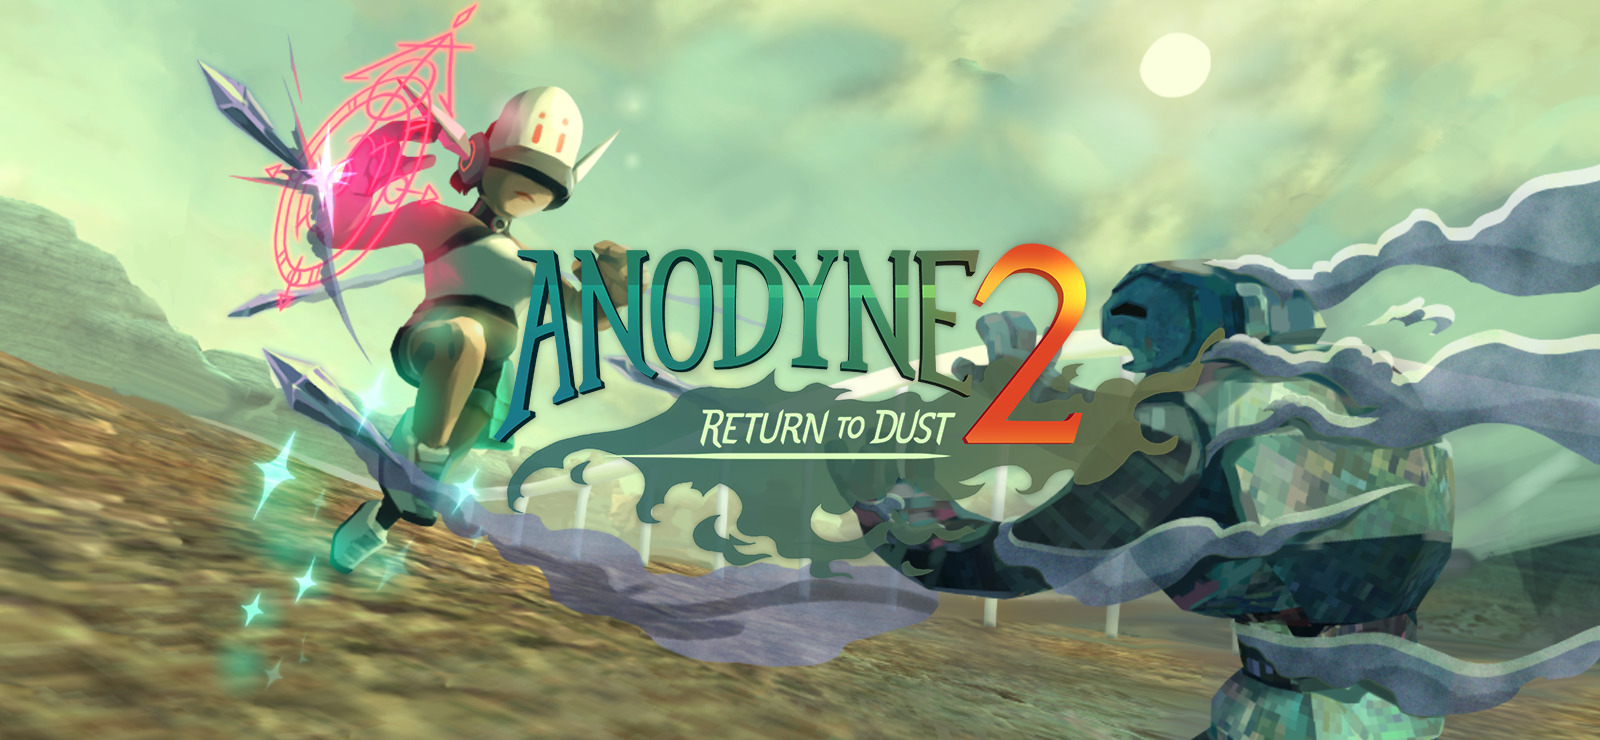 Anodyne 2: Return to Dust v1.51 DRM-Free Download - Free GOG